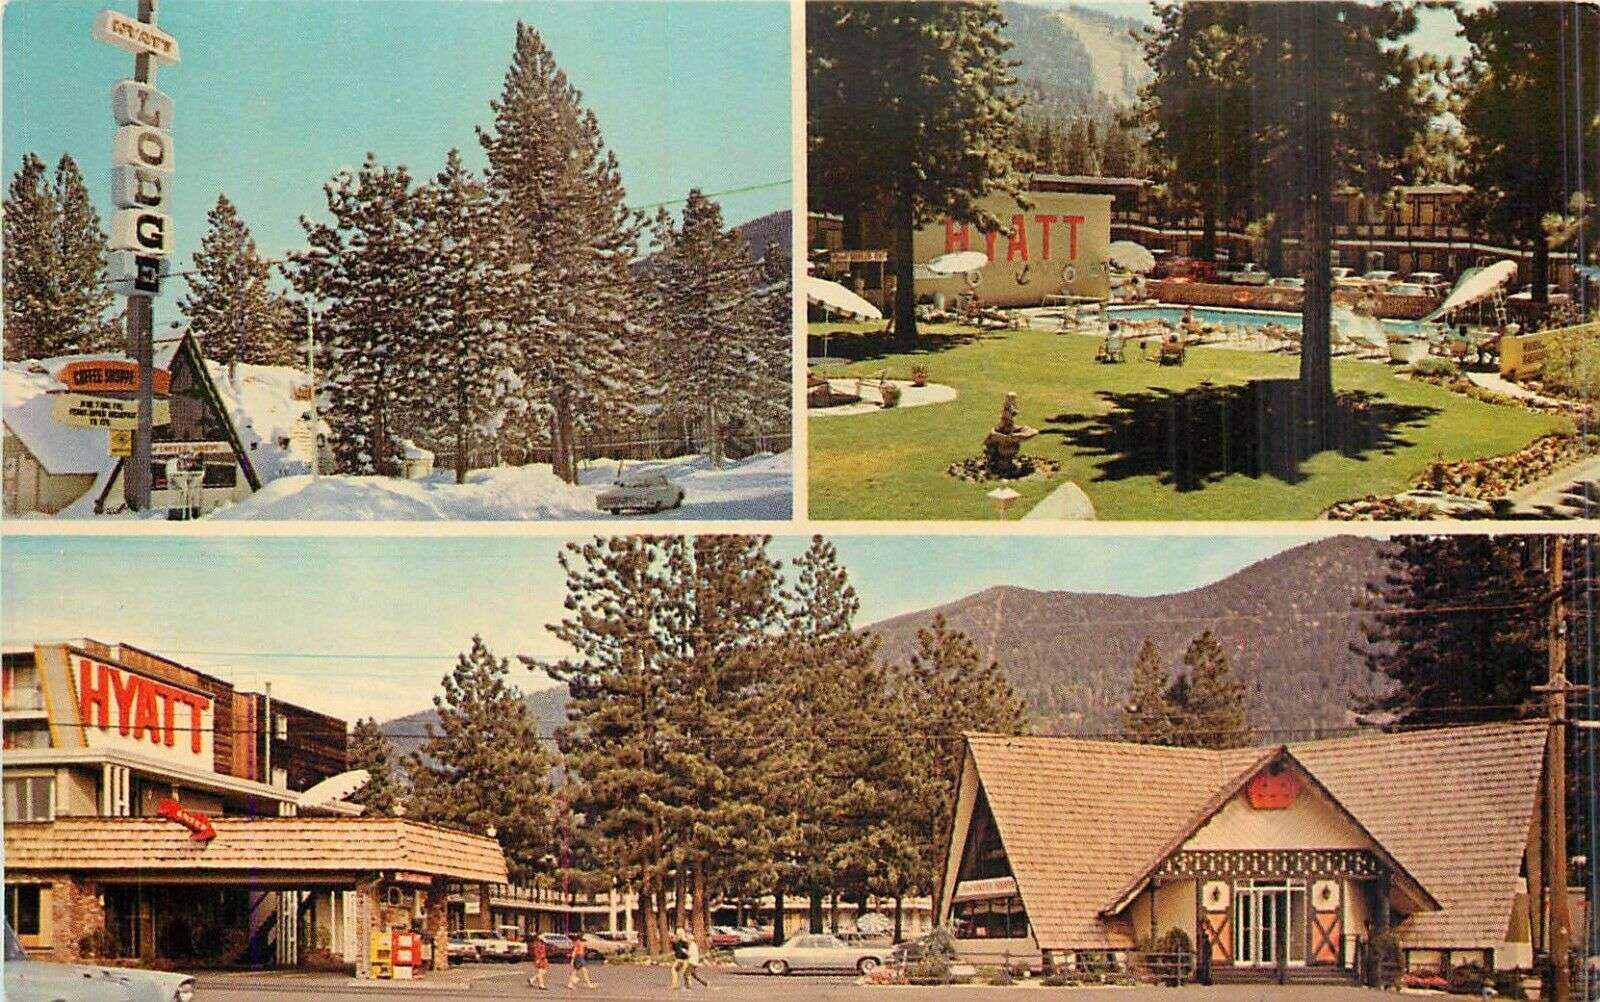 Hyatt Lodge - tourist class hotel. Hyatt Lodge South Lake Tahoe, California